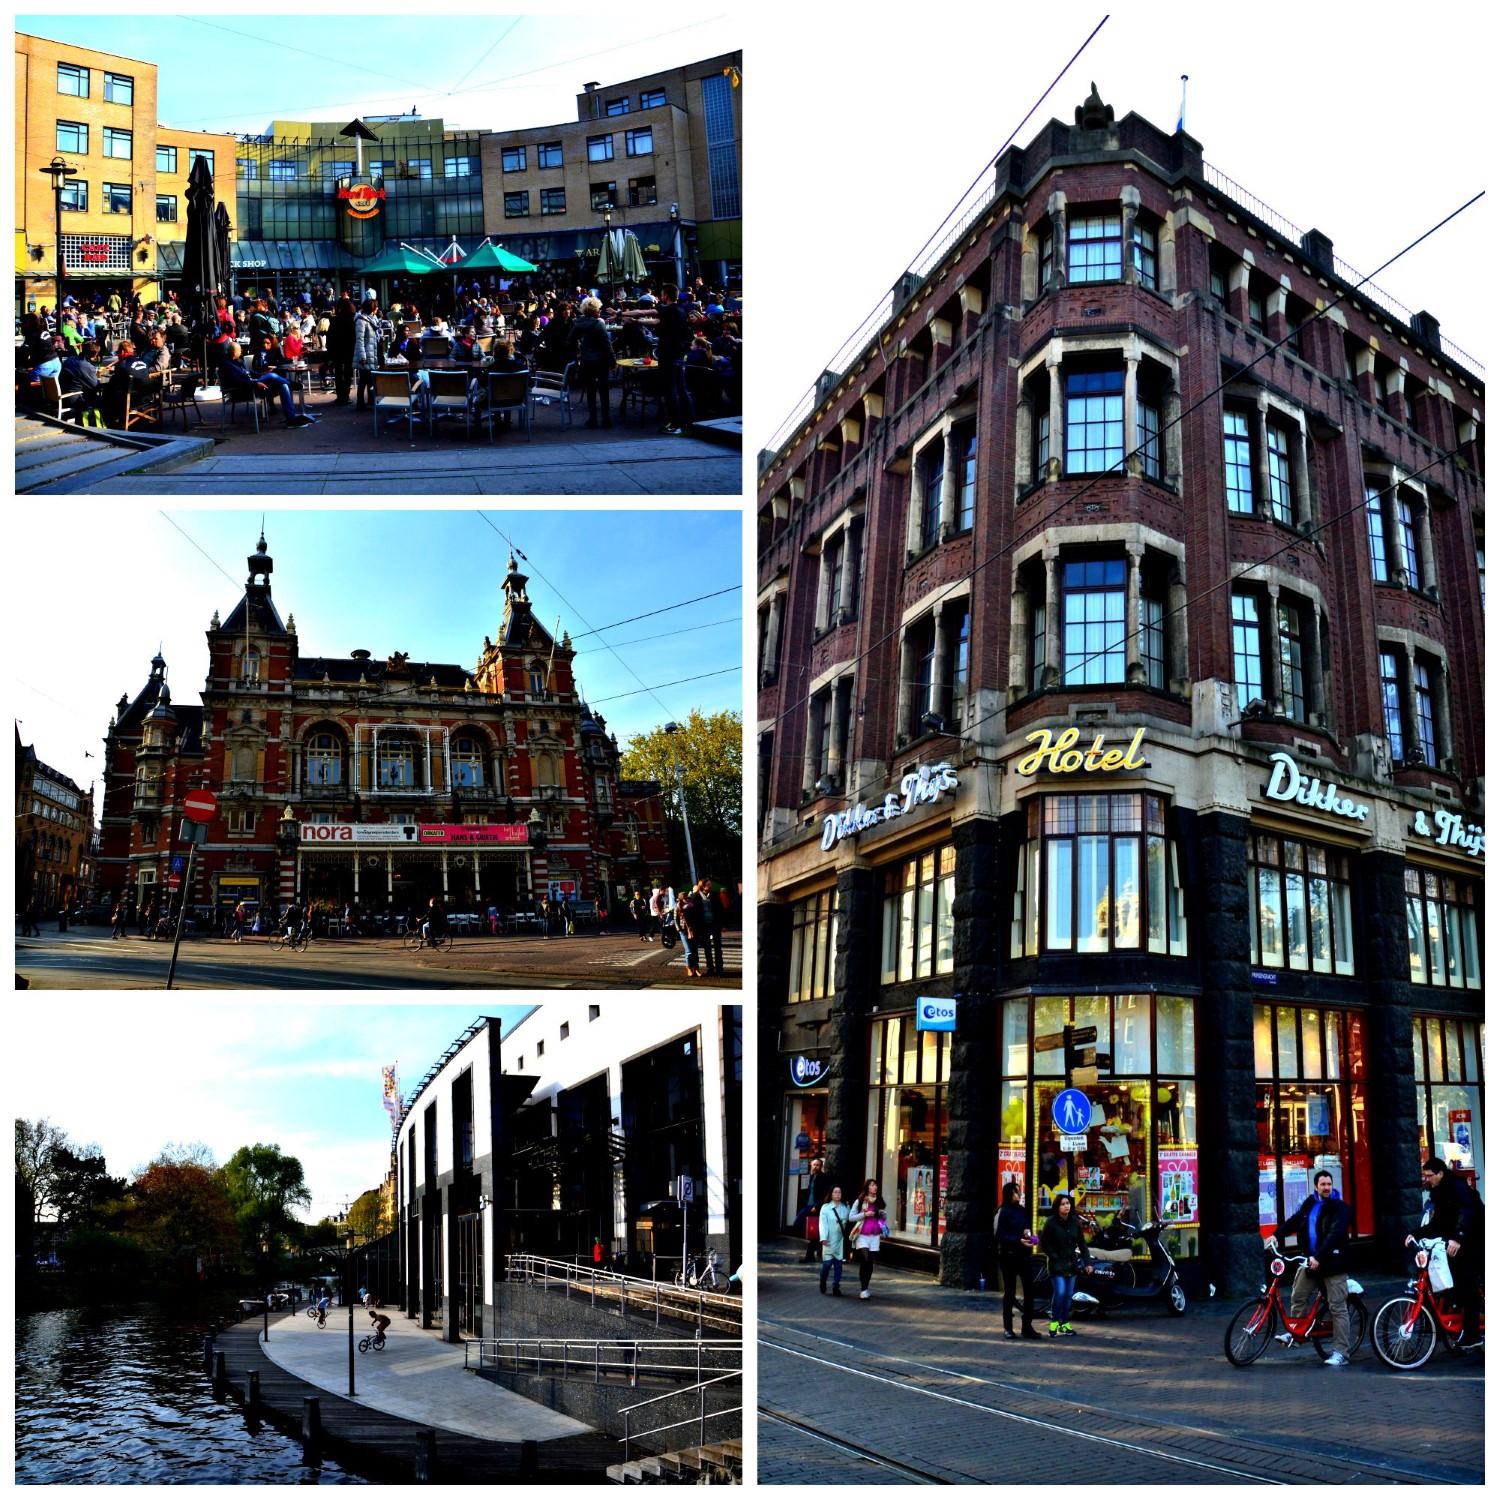 Amsterdam, Holandia - bele kaj, blog podróżniczy po śląsku